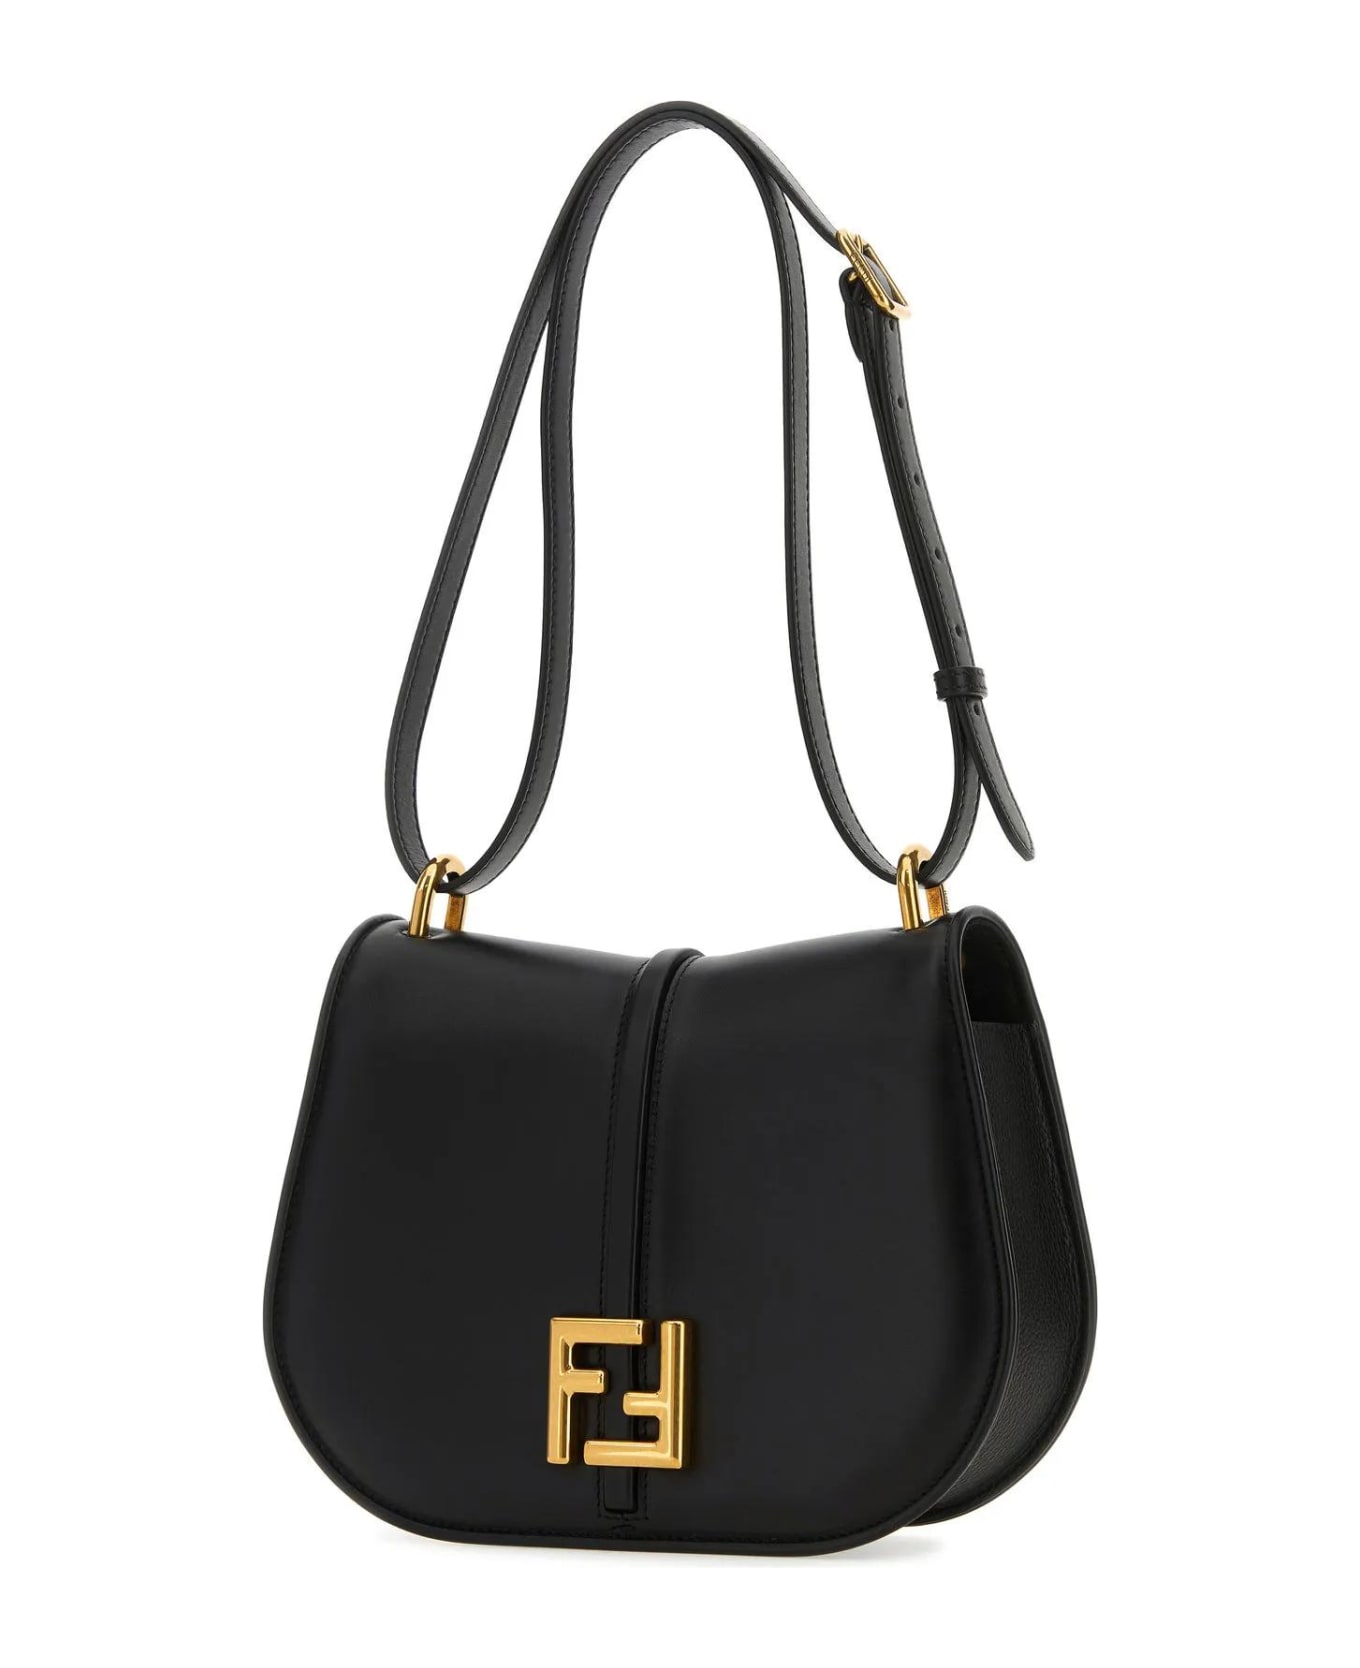 Fendi Black Leather C'mon Medium Shoulder Bag - Black